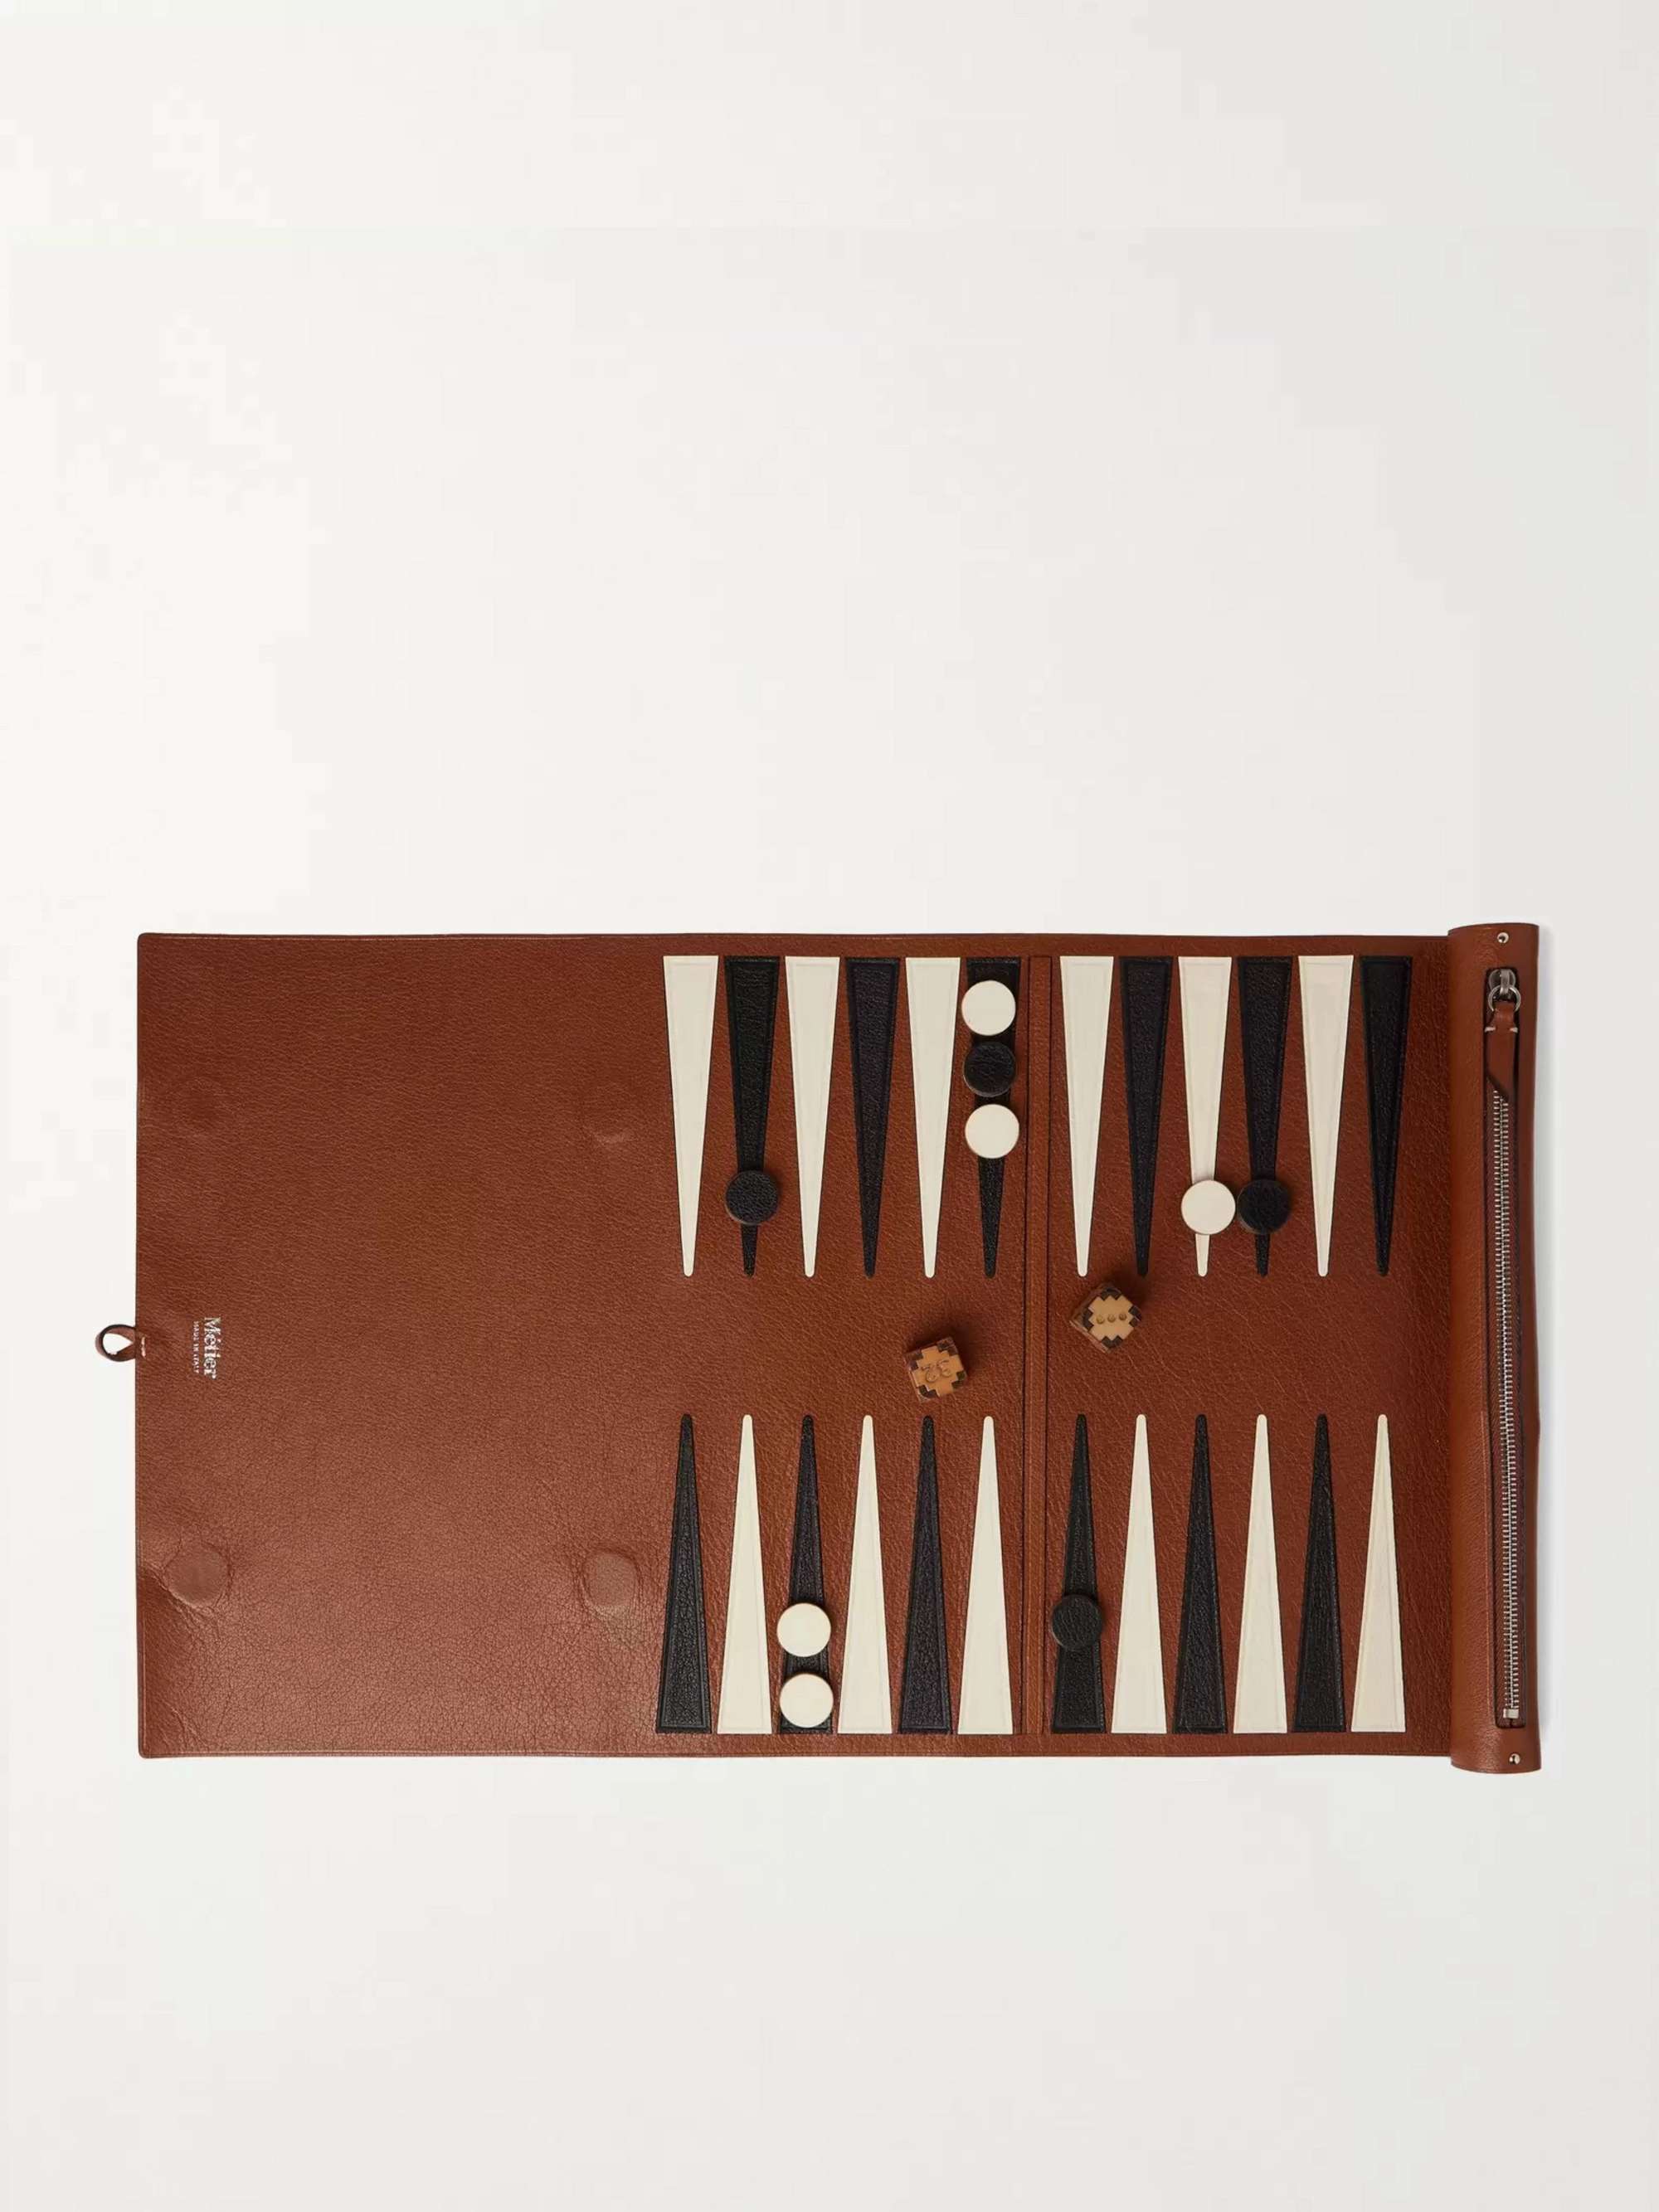 MÉTIER Portable Leather Backgammon Set